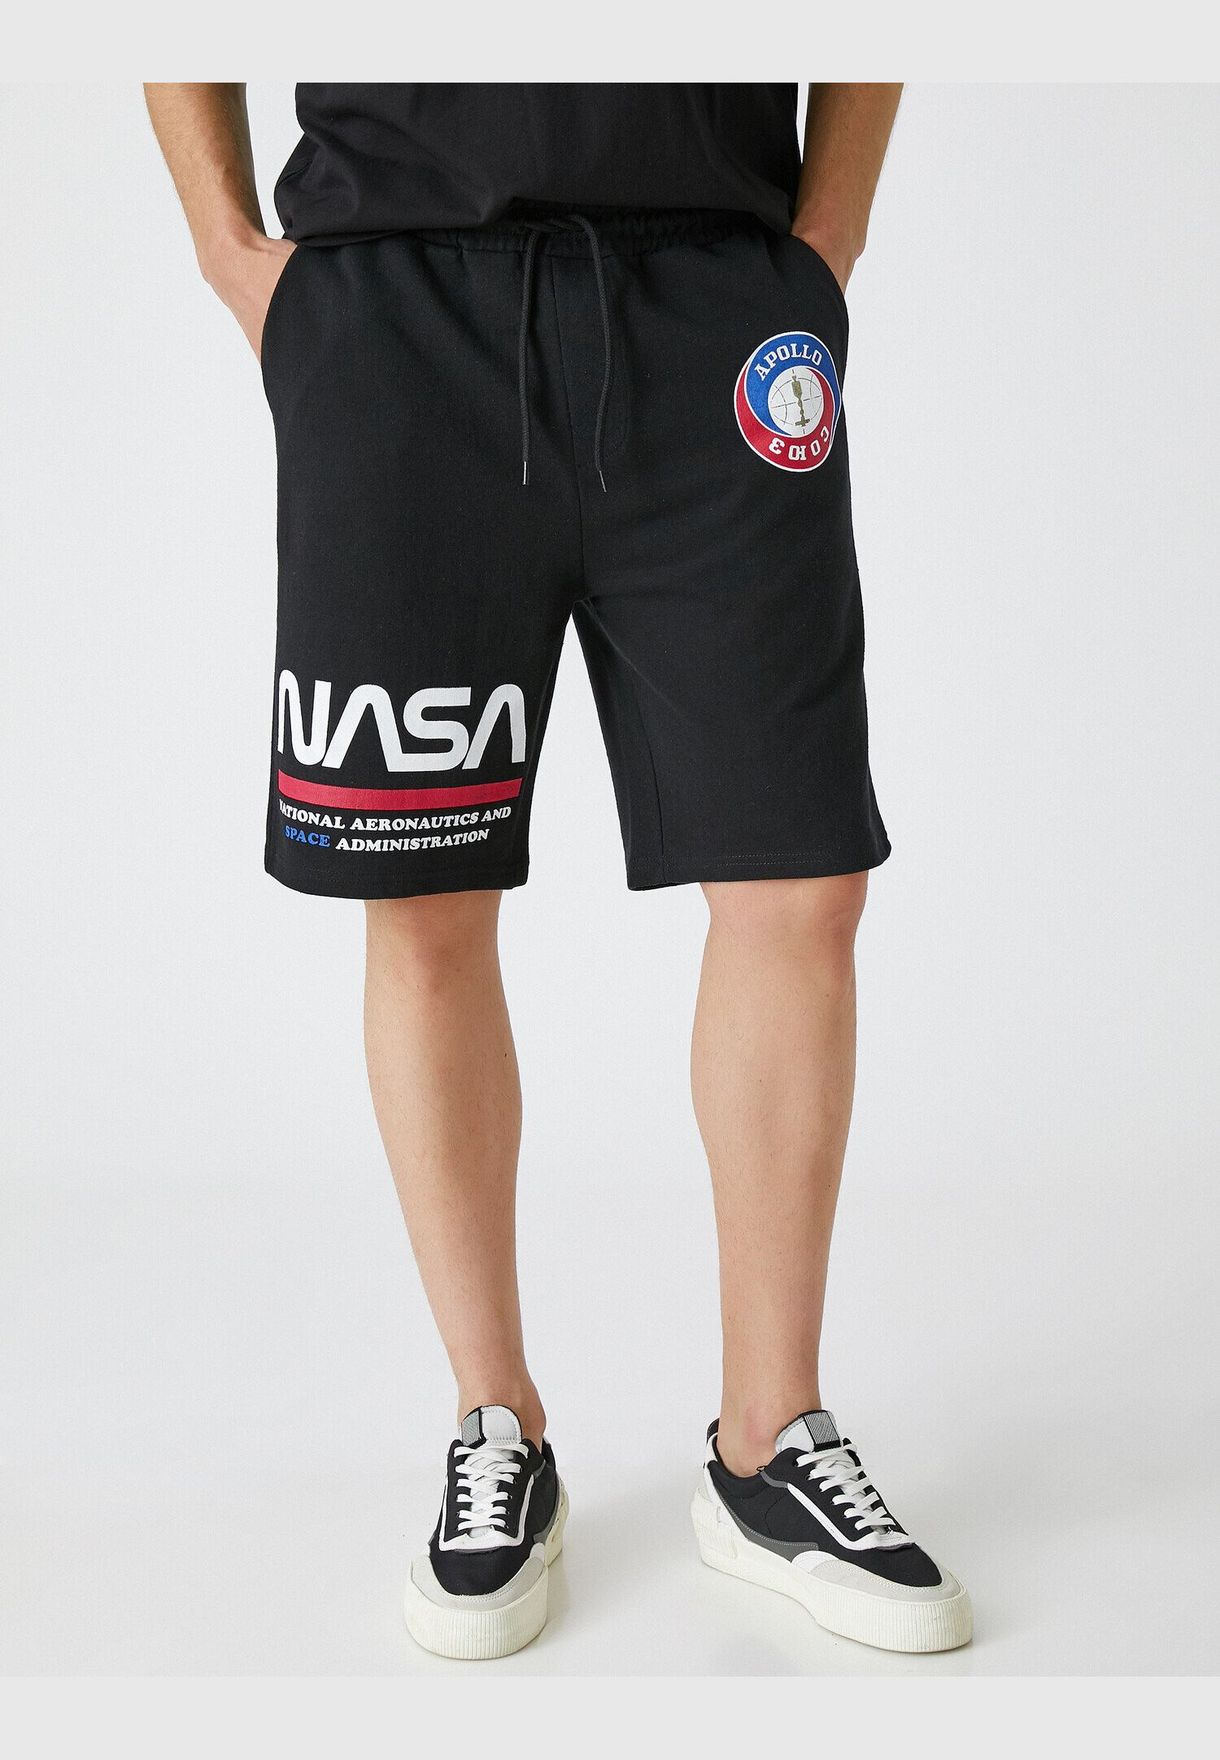 NASA Bermuda Shorts Licensed Cotton